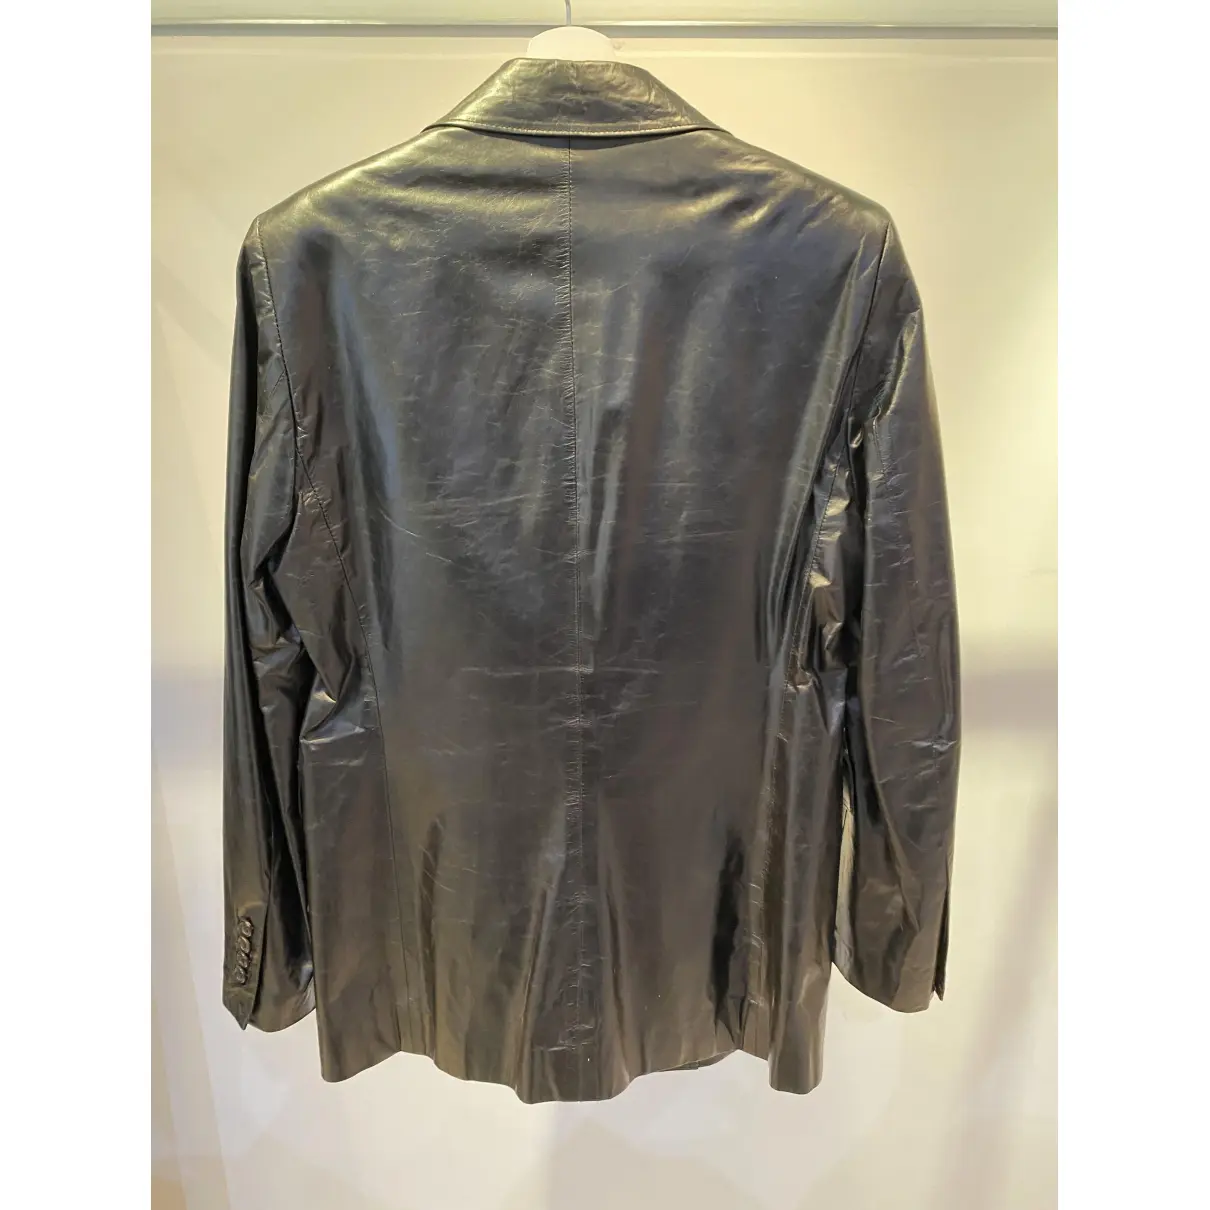 Buy Ann Demeulemeester Leather blazer online